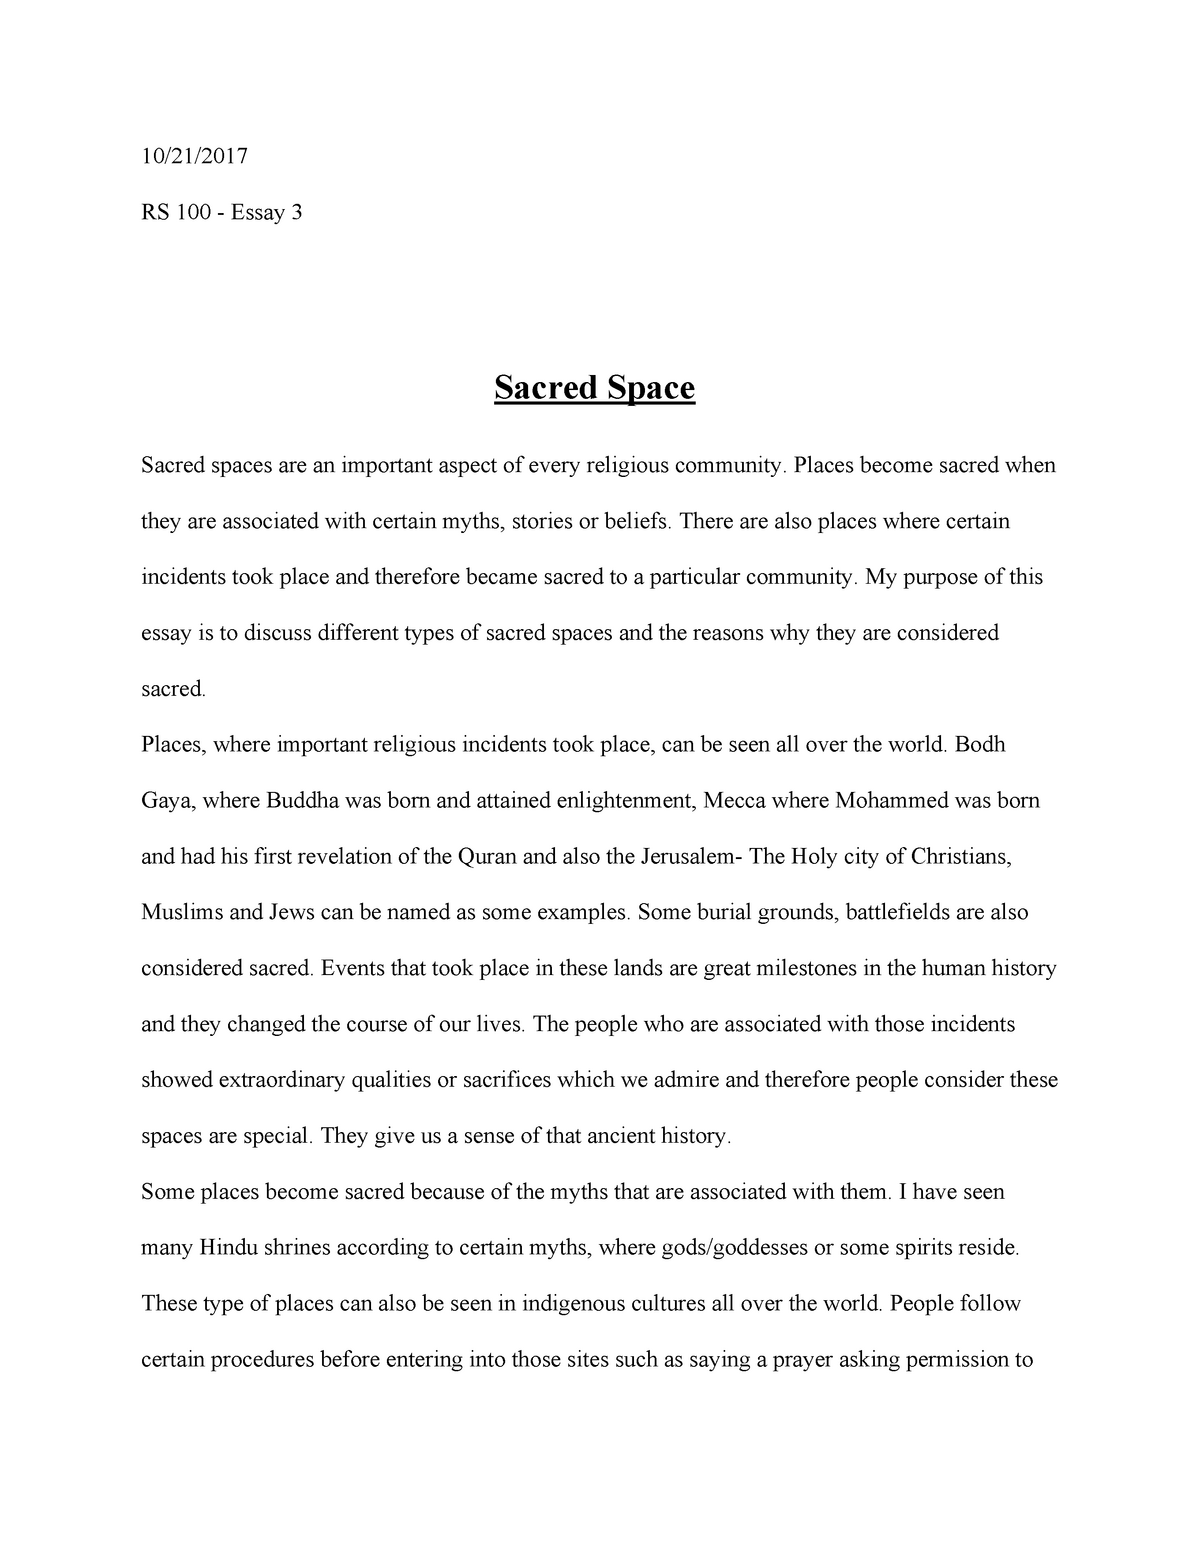 Реферат: A Sacred Place Essay Research Paper A